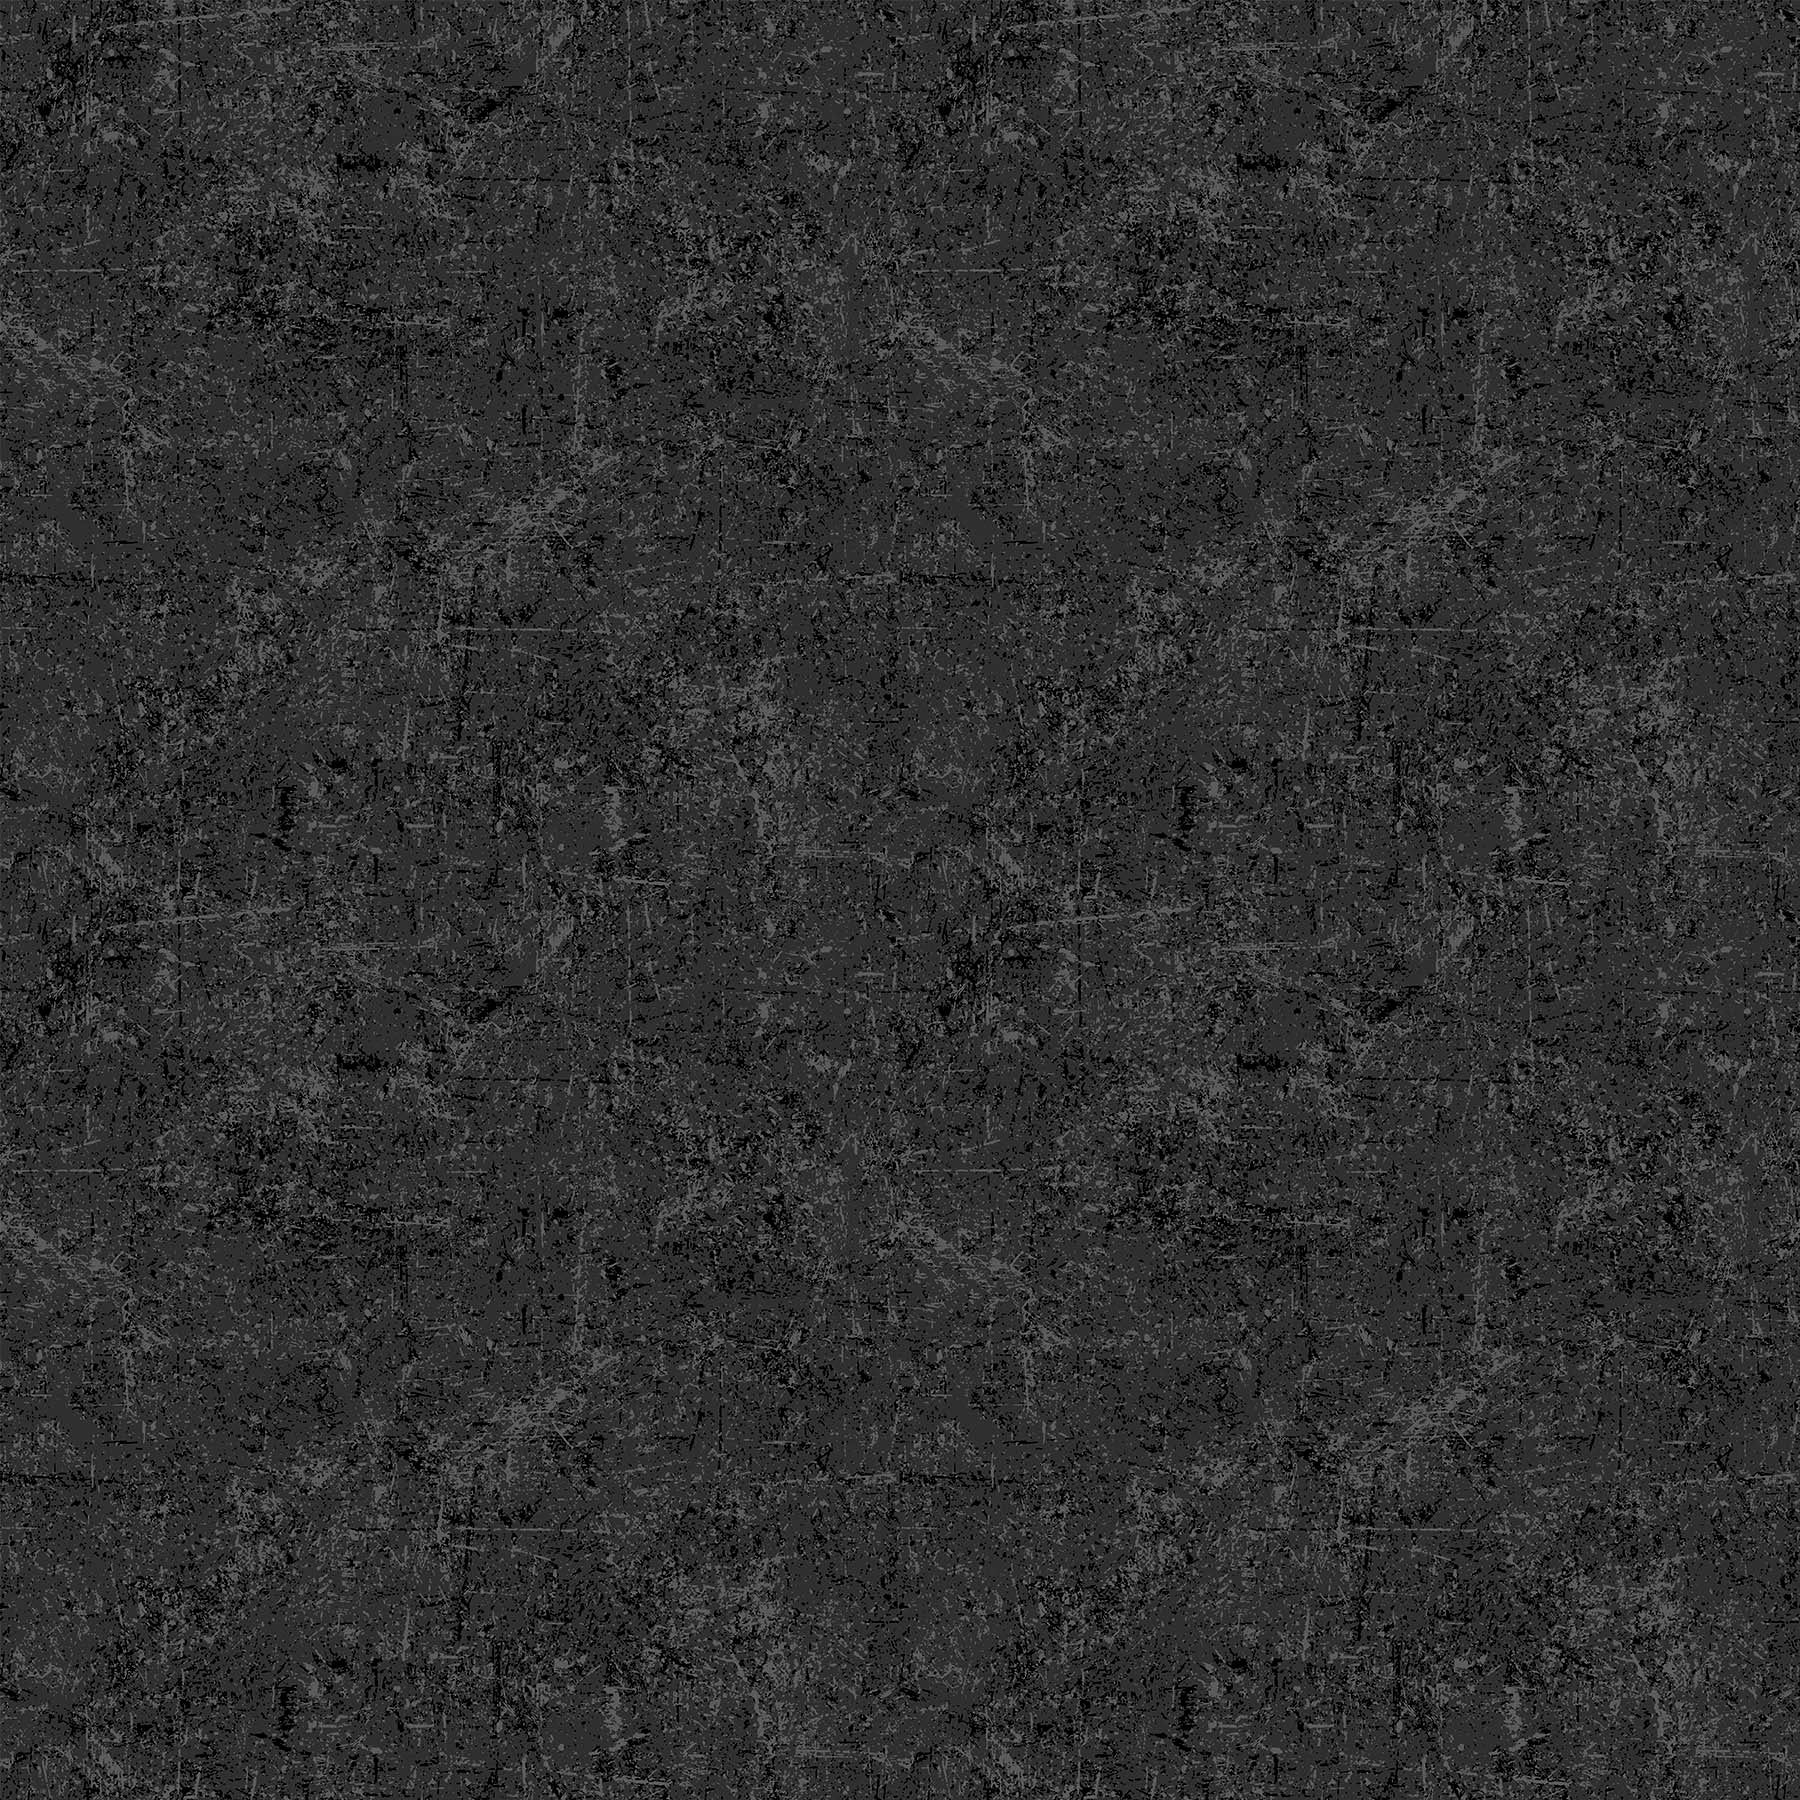 Glisten Quilt Fabric - Blender in Charcoal Black - P10091-99